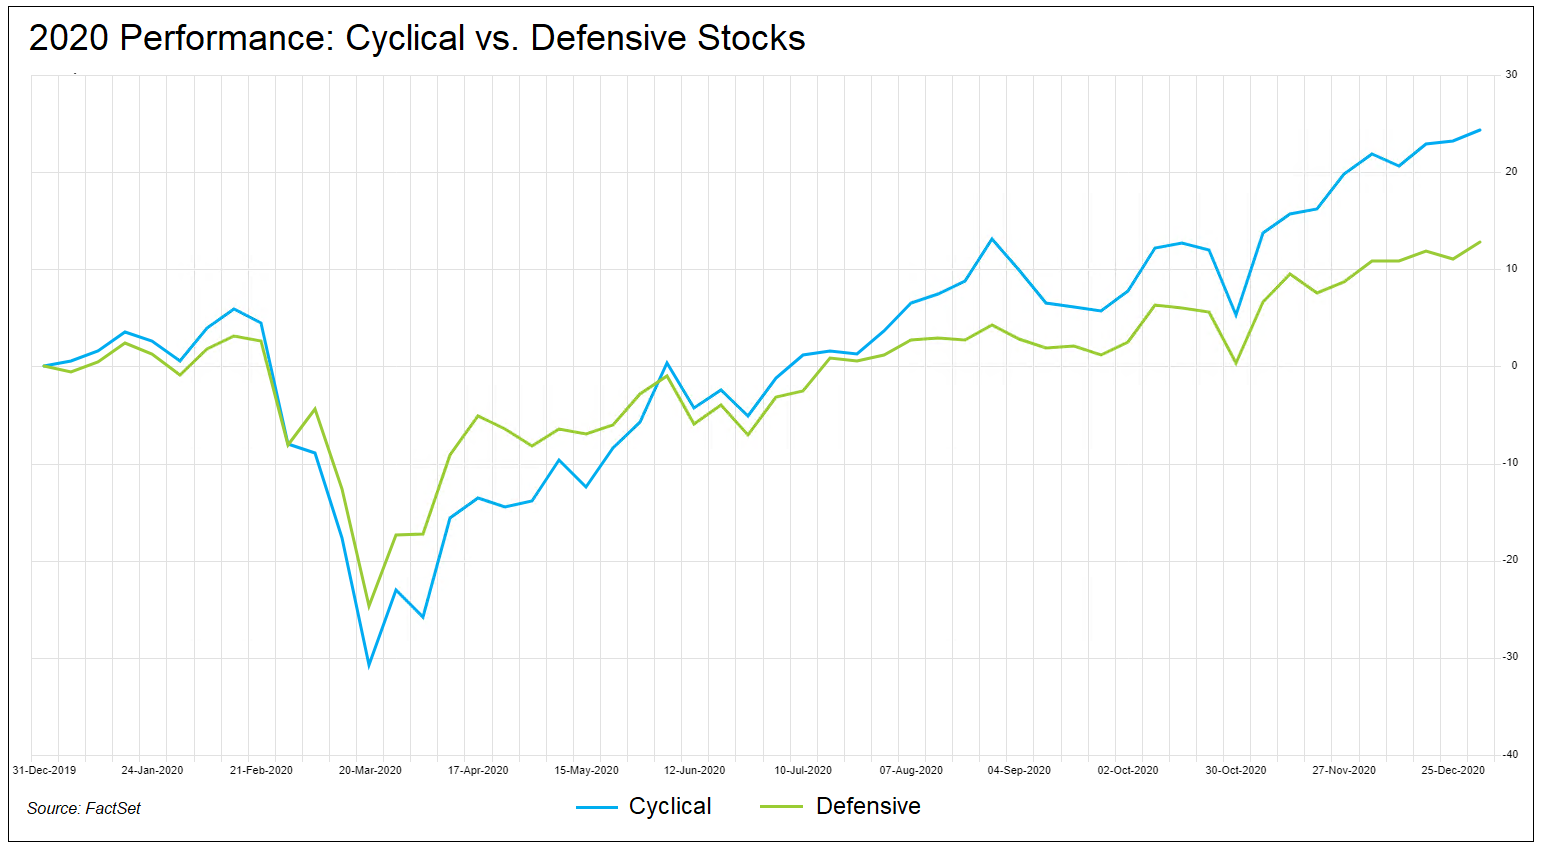 Cyclical vs. Defensive Stocks Performance